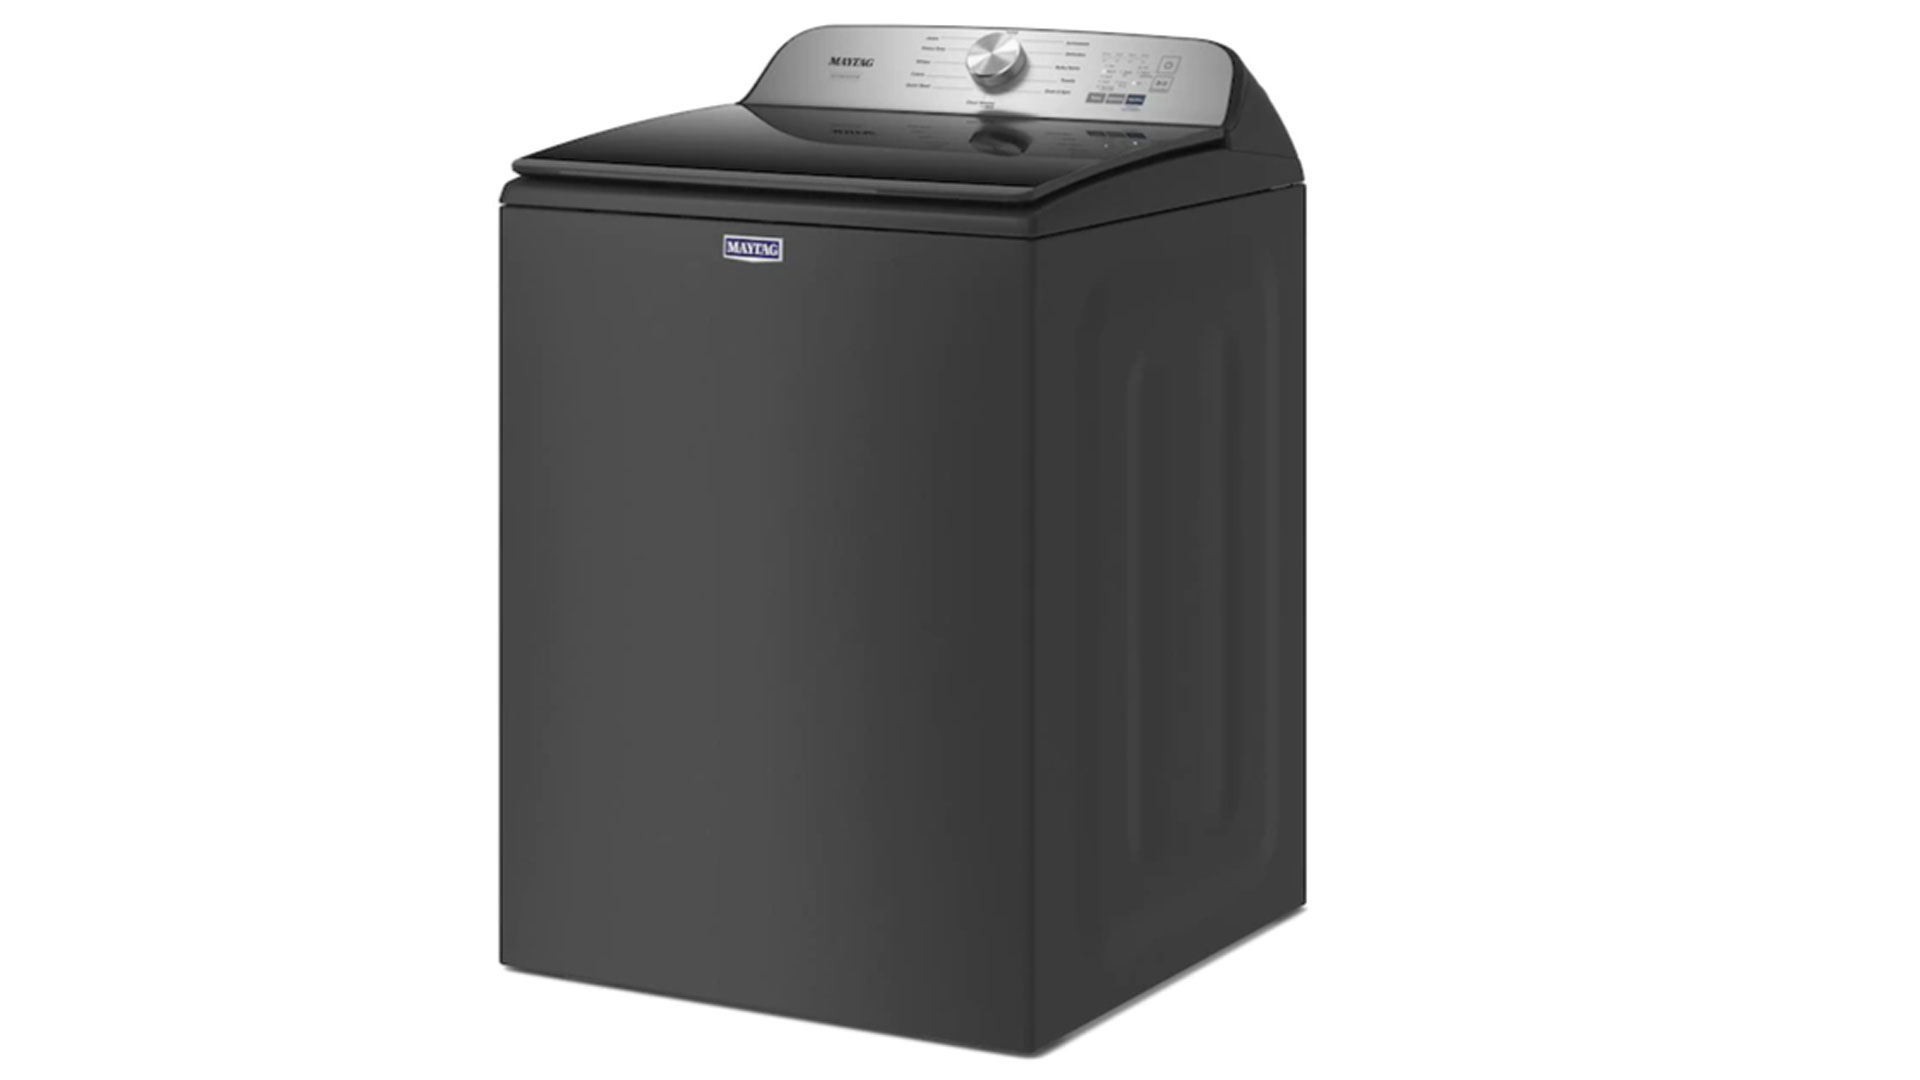 Maytag-MVW6500MBK washing machine